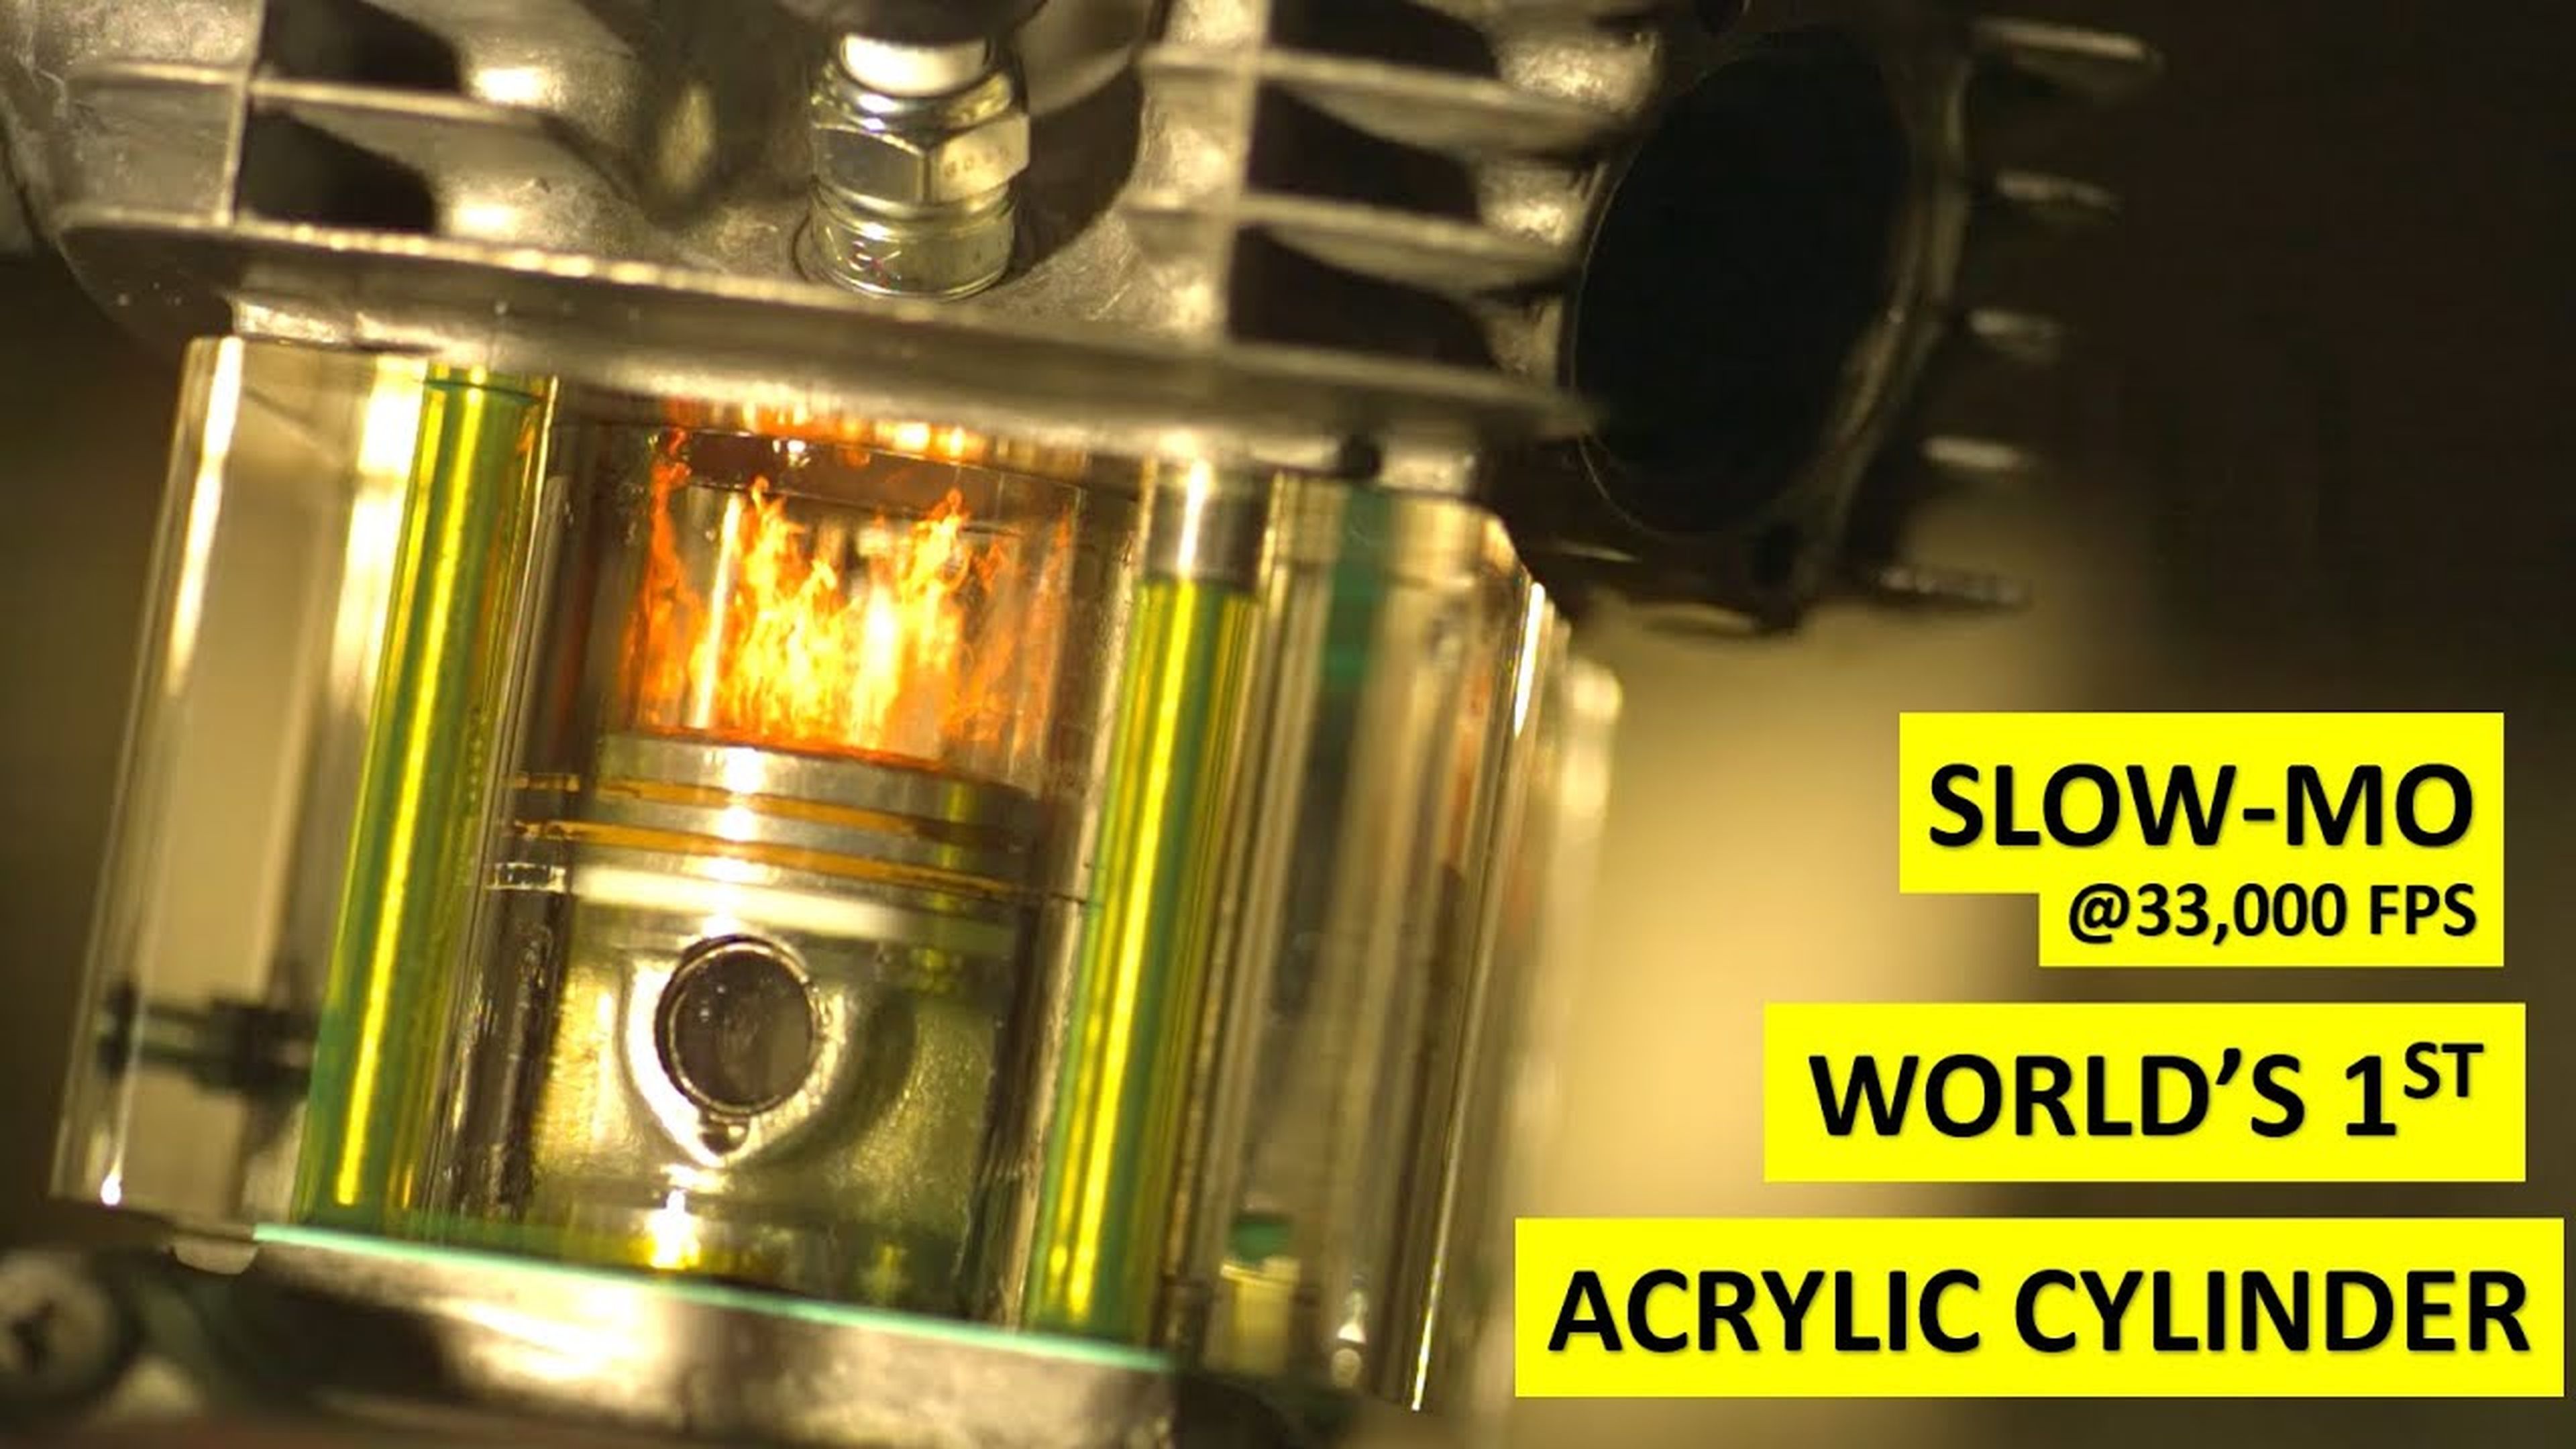 Transparent Engine Cylinder | How an Engine Works in 4K Slow Motion